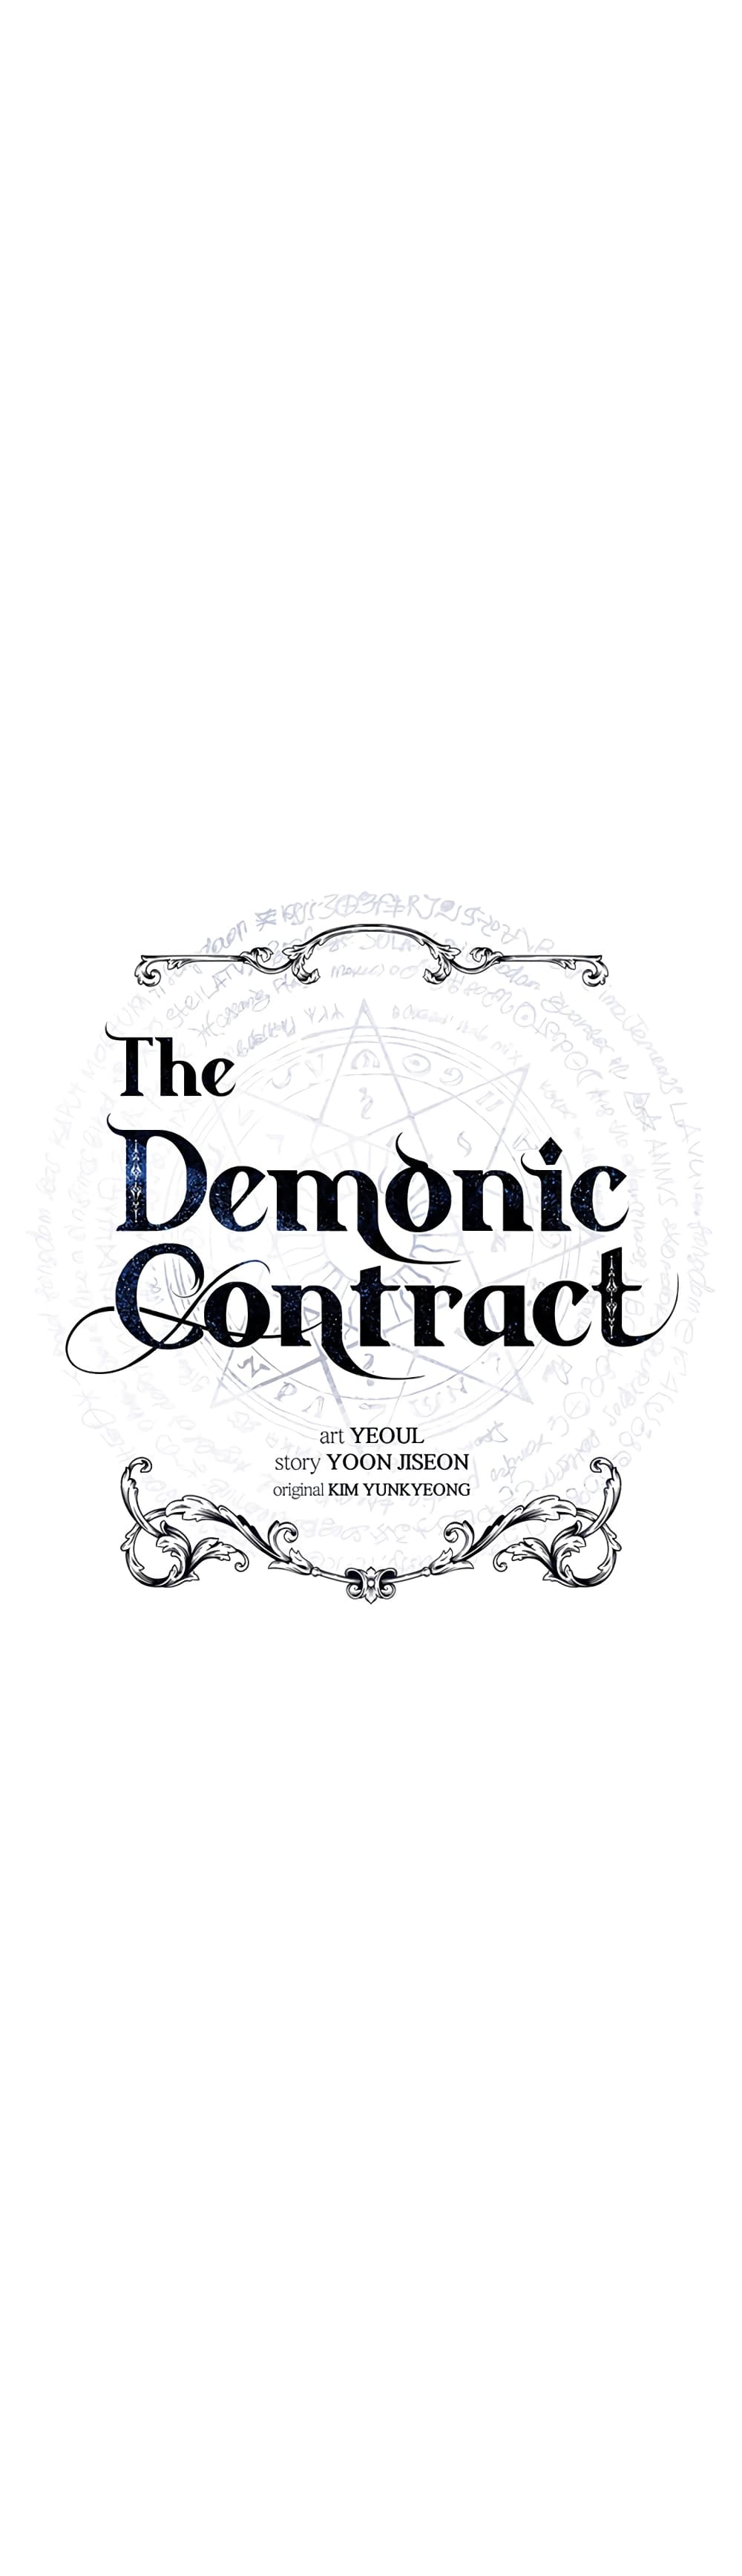 The Demonic Contract 41 (3)